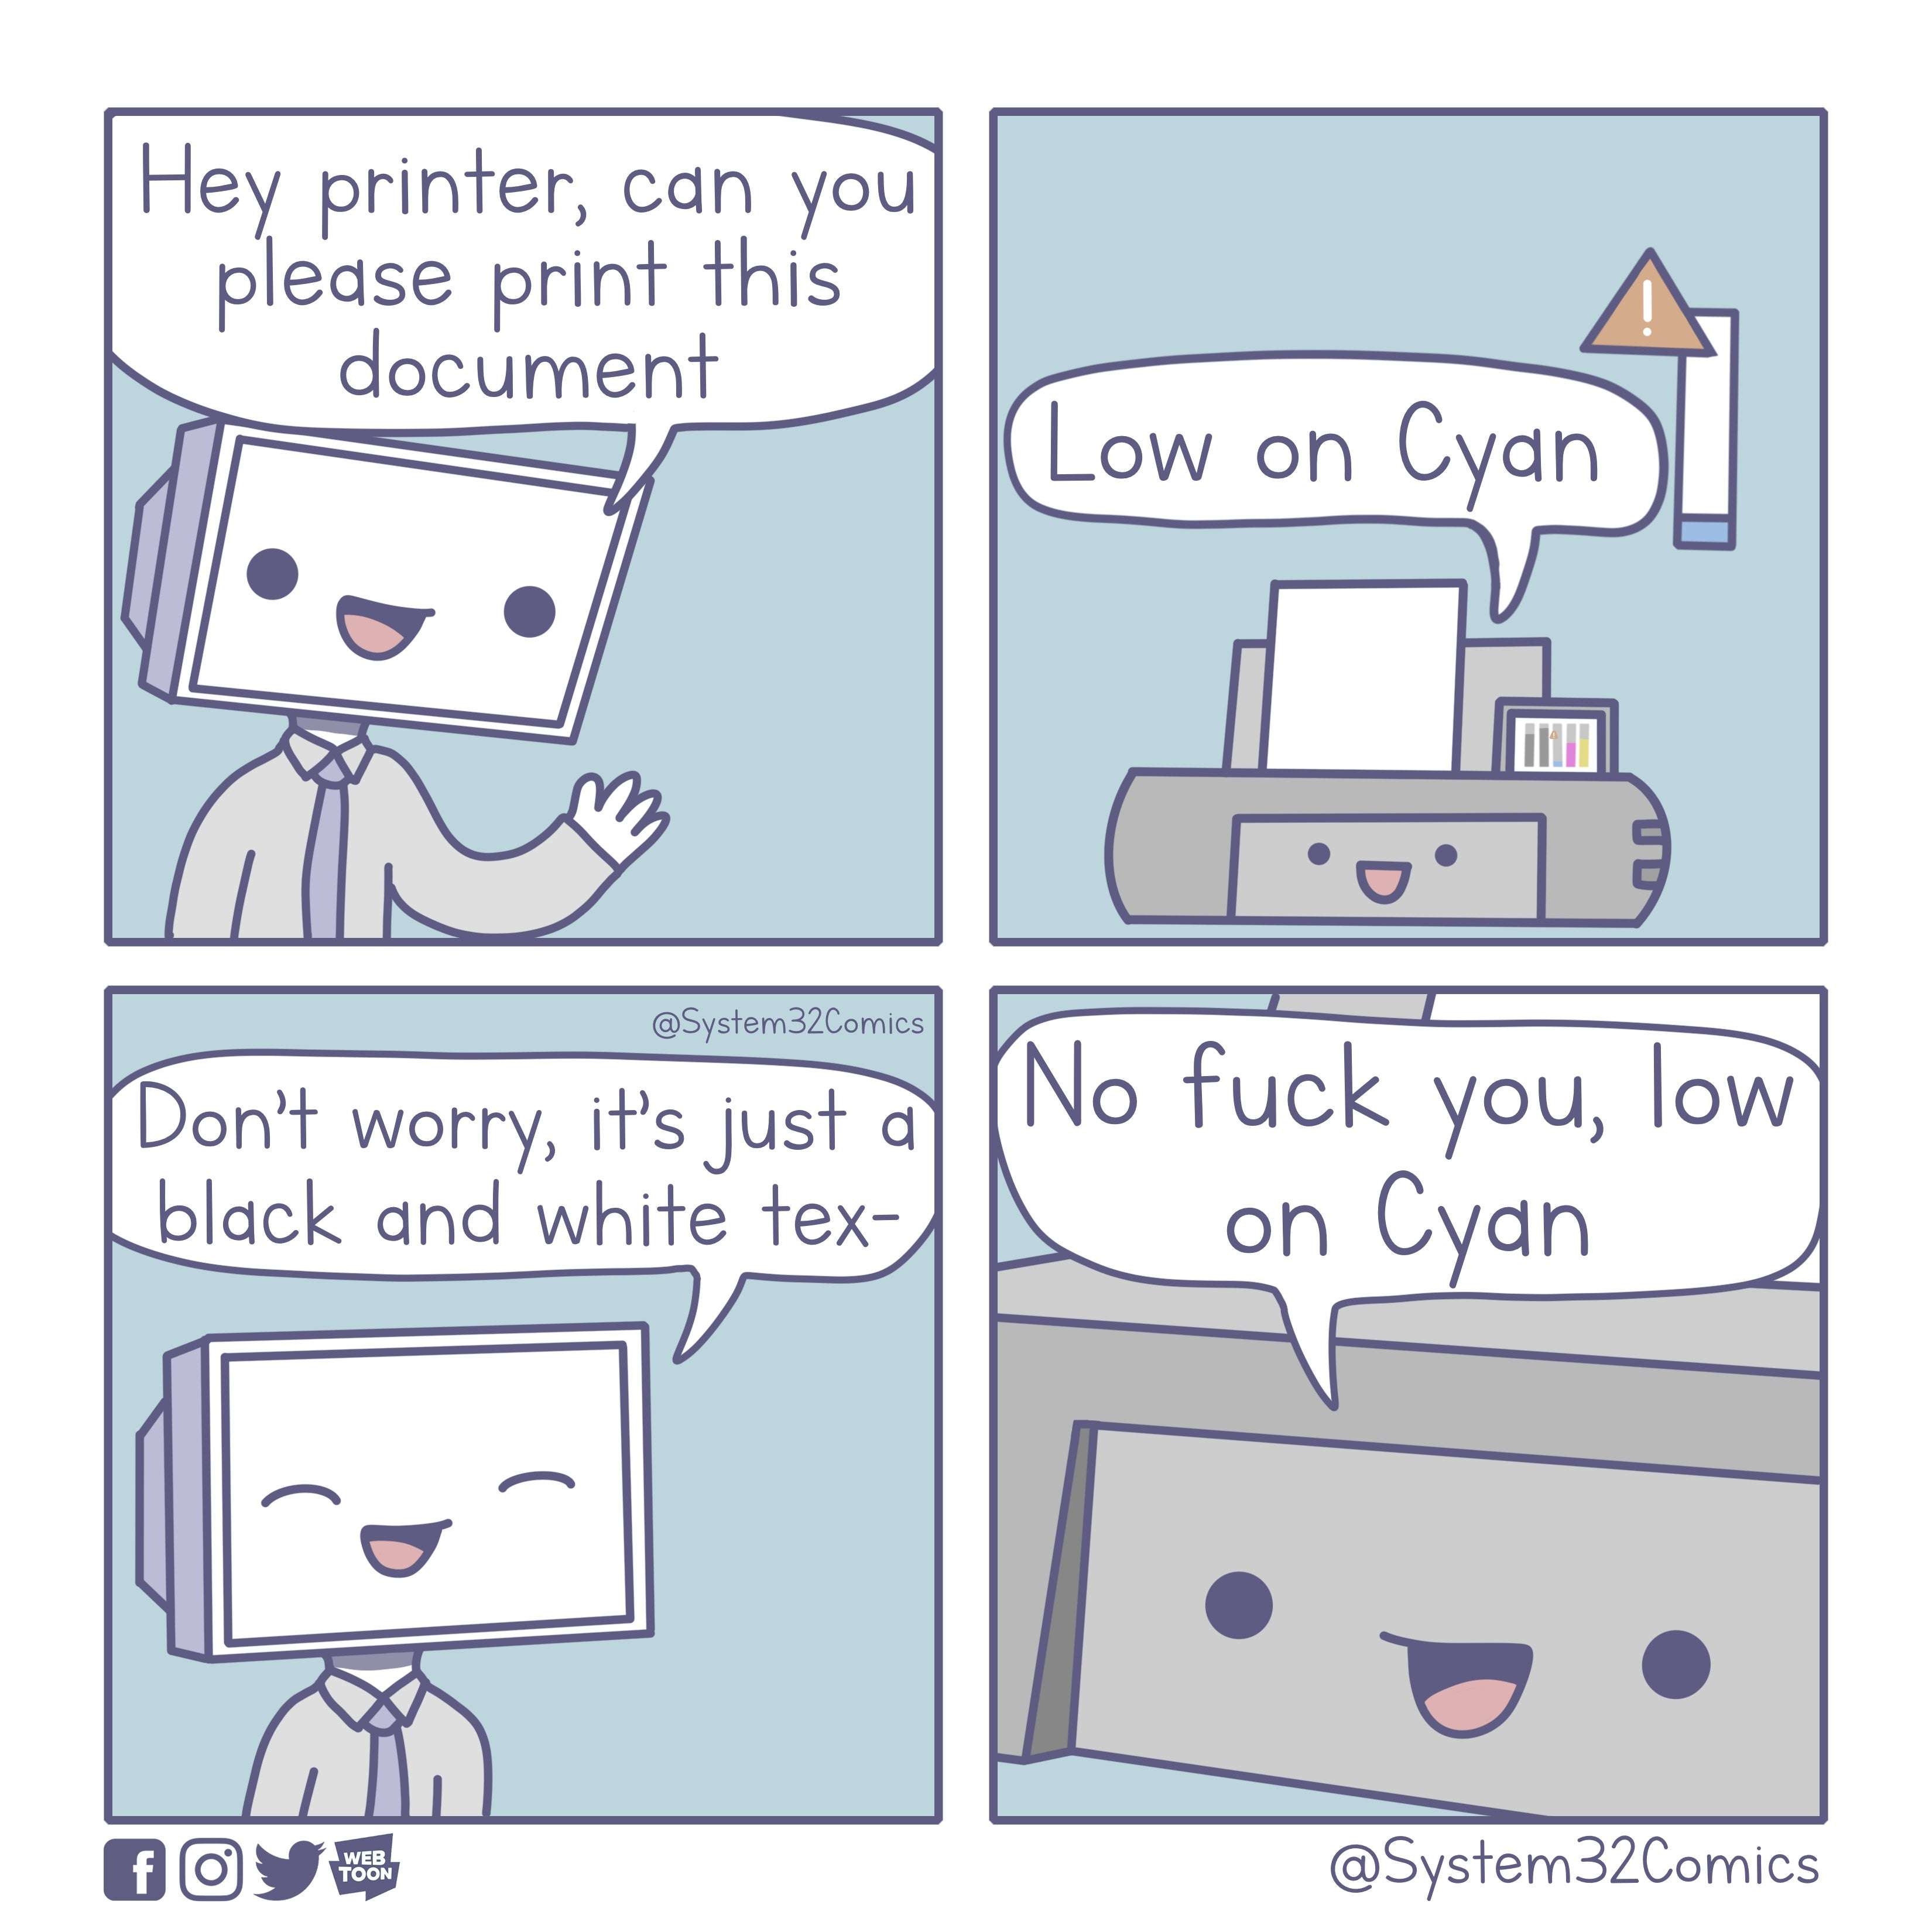 image showing Printers